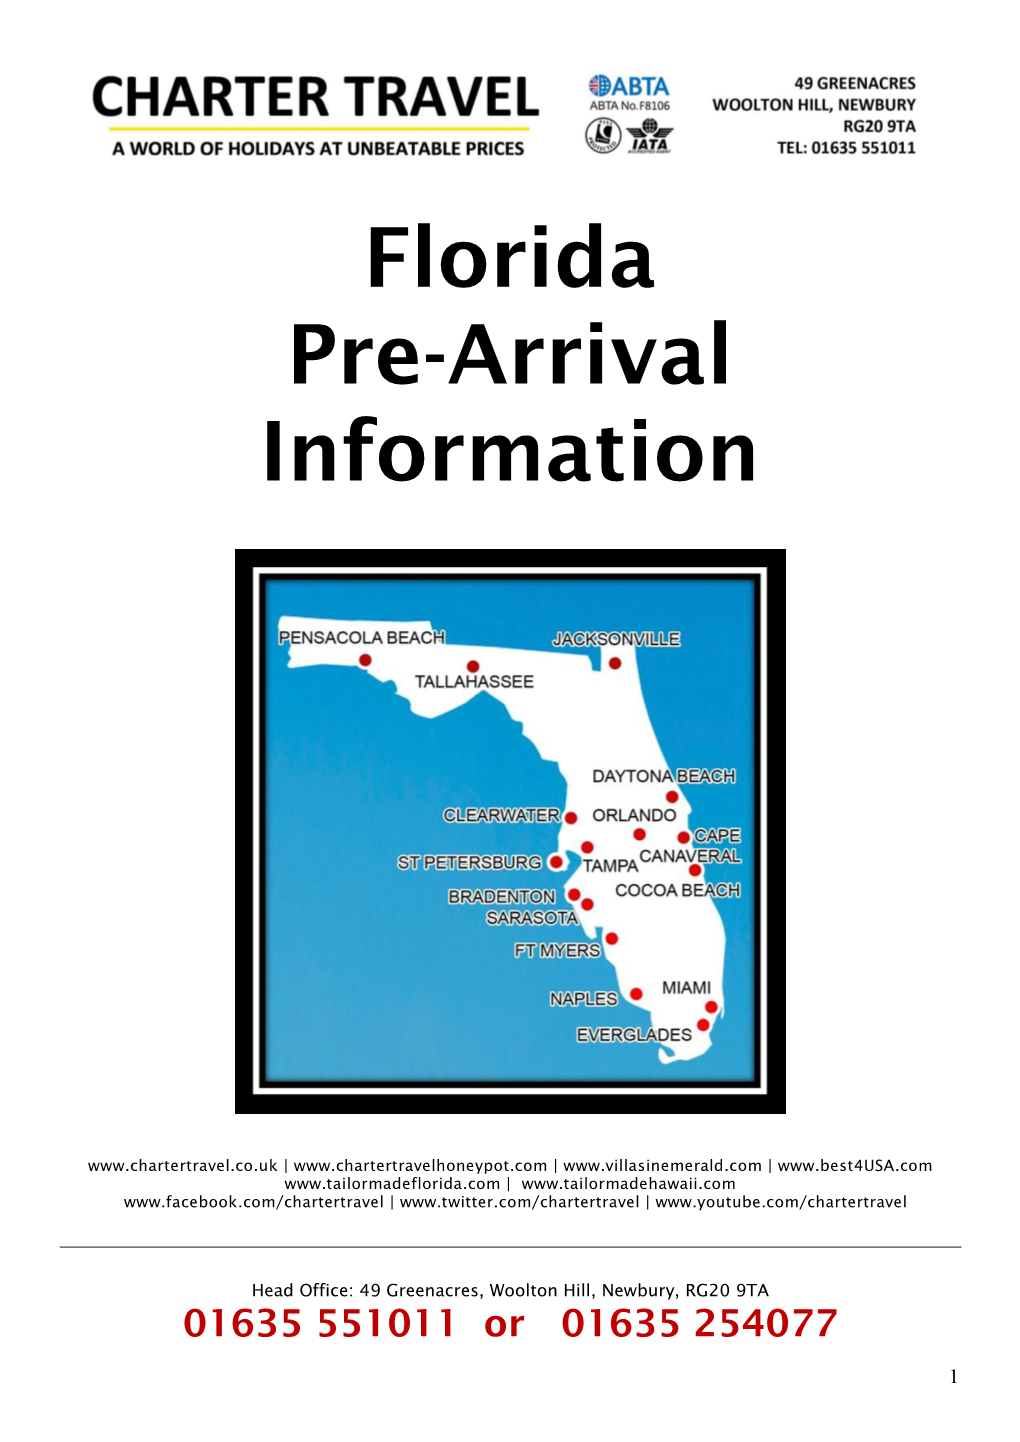 Florida Pre-Arrival Information